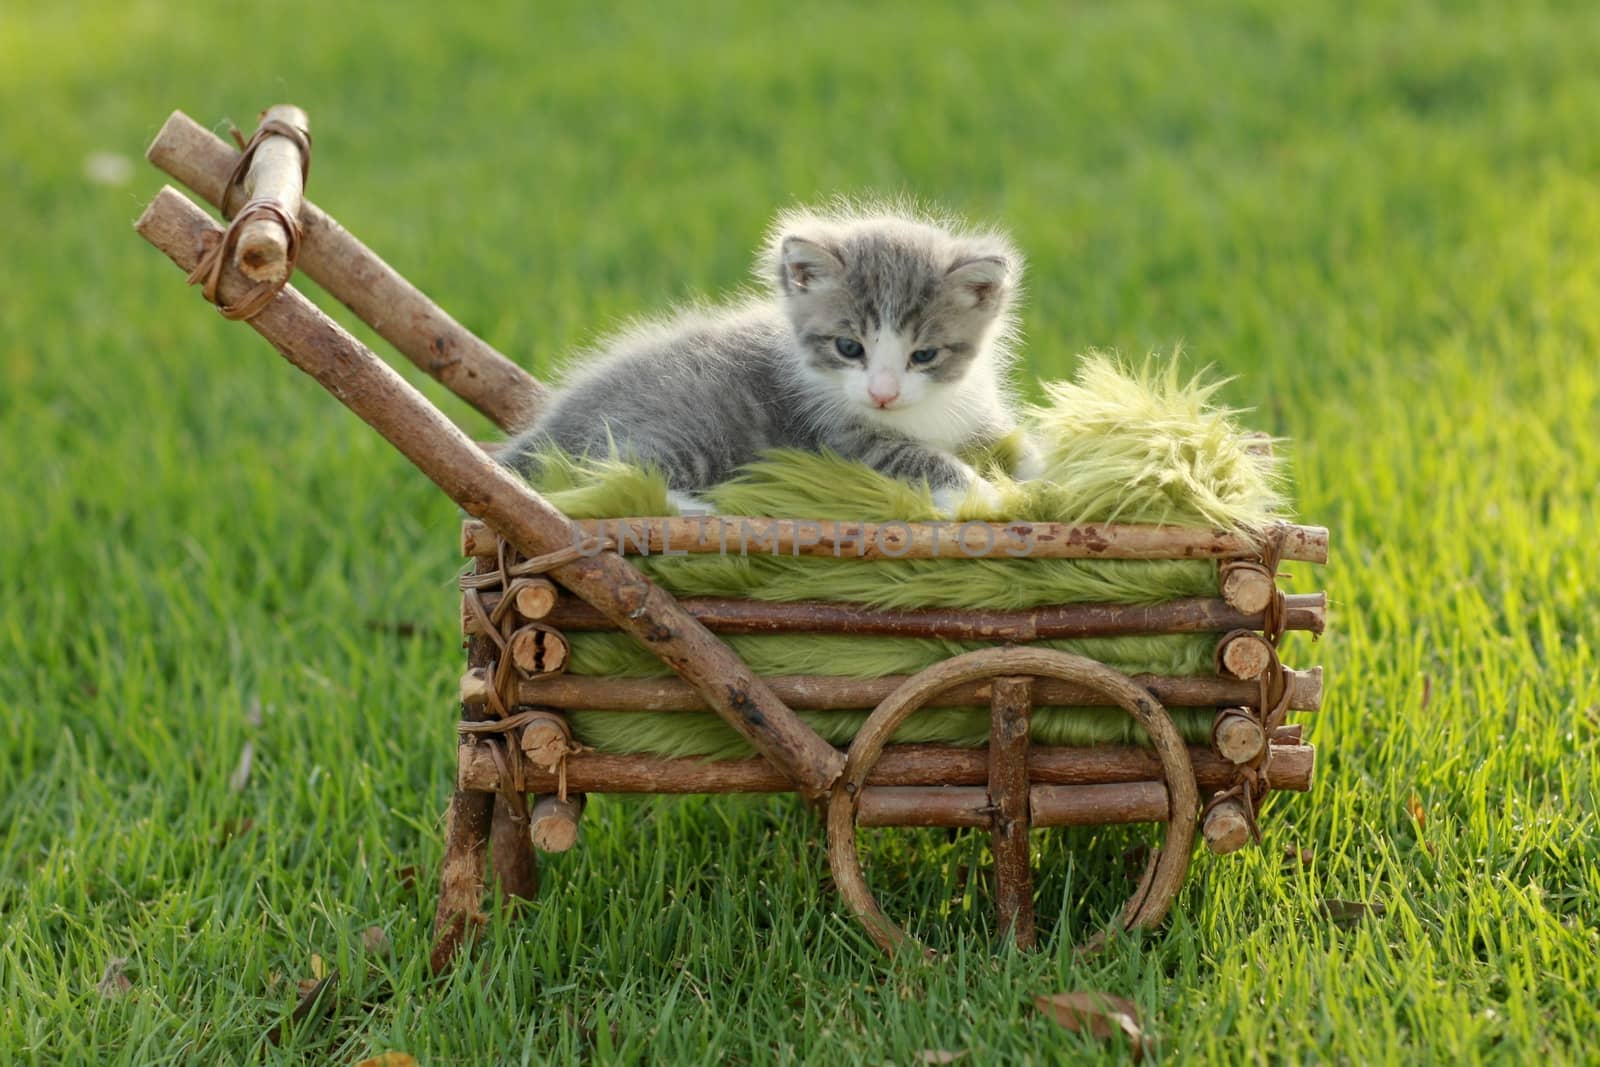 Baby Kitten Outdoors in Grass by tobkatrina